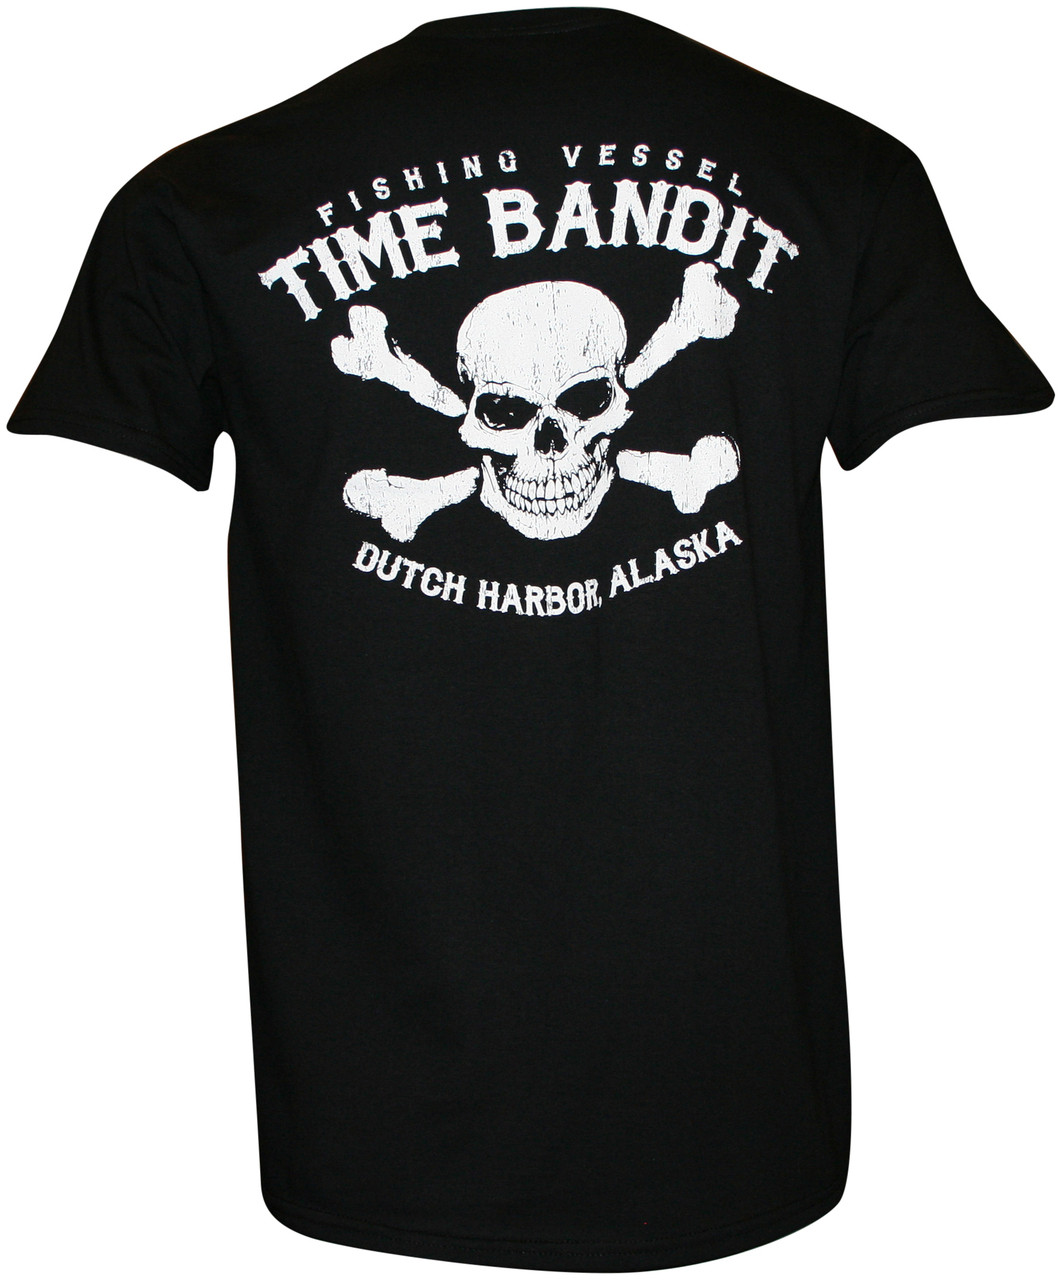 time bandit t shirts